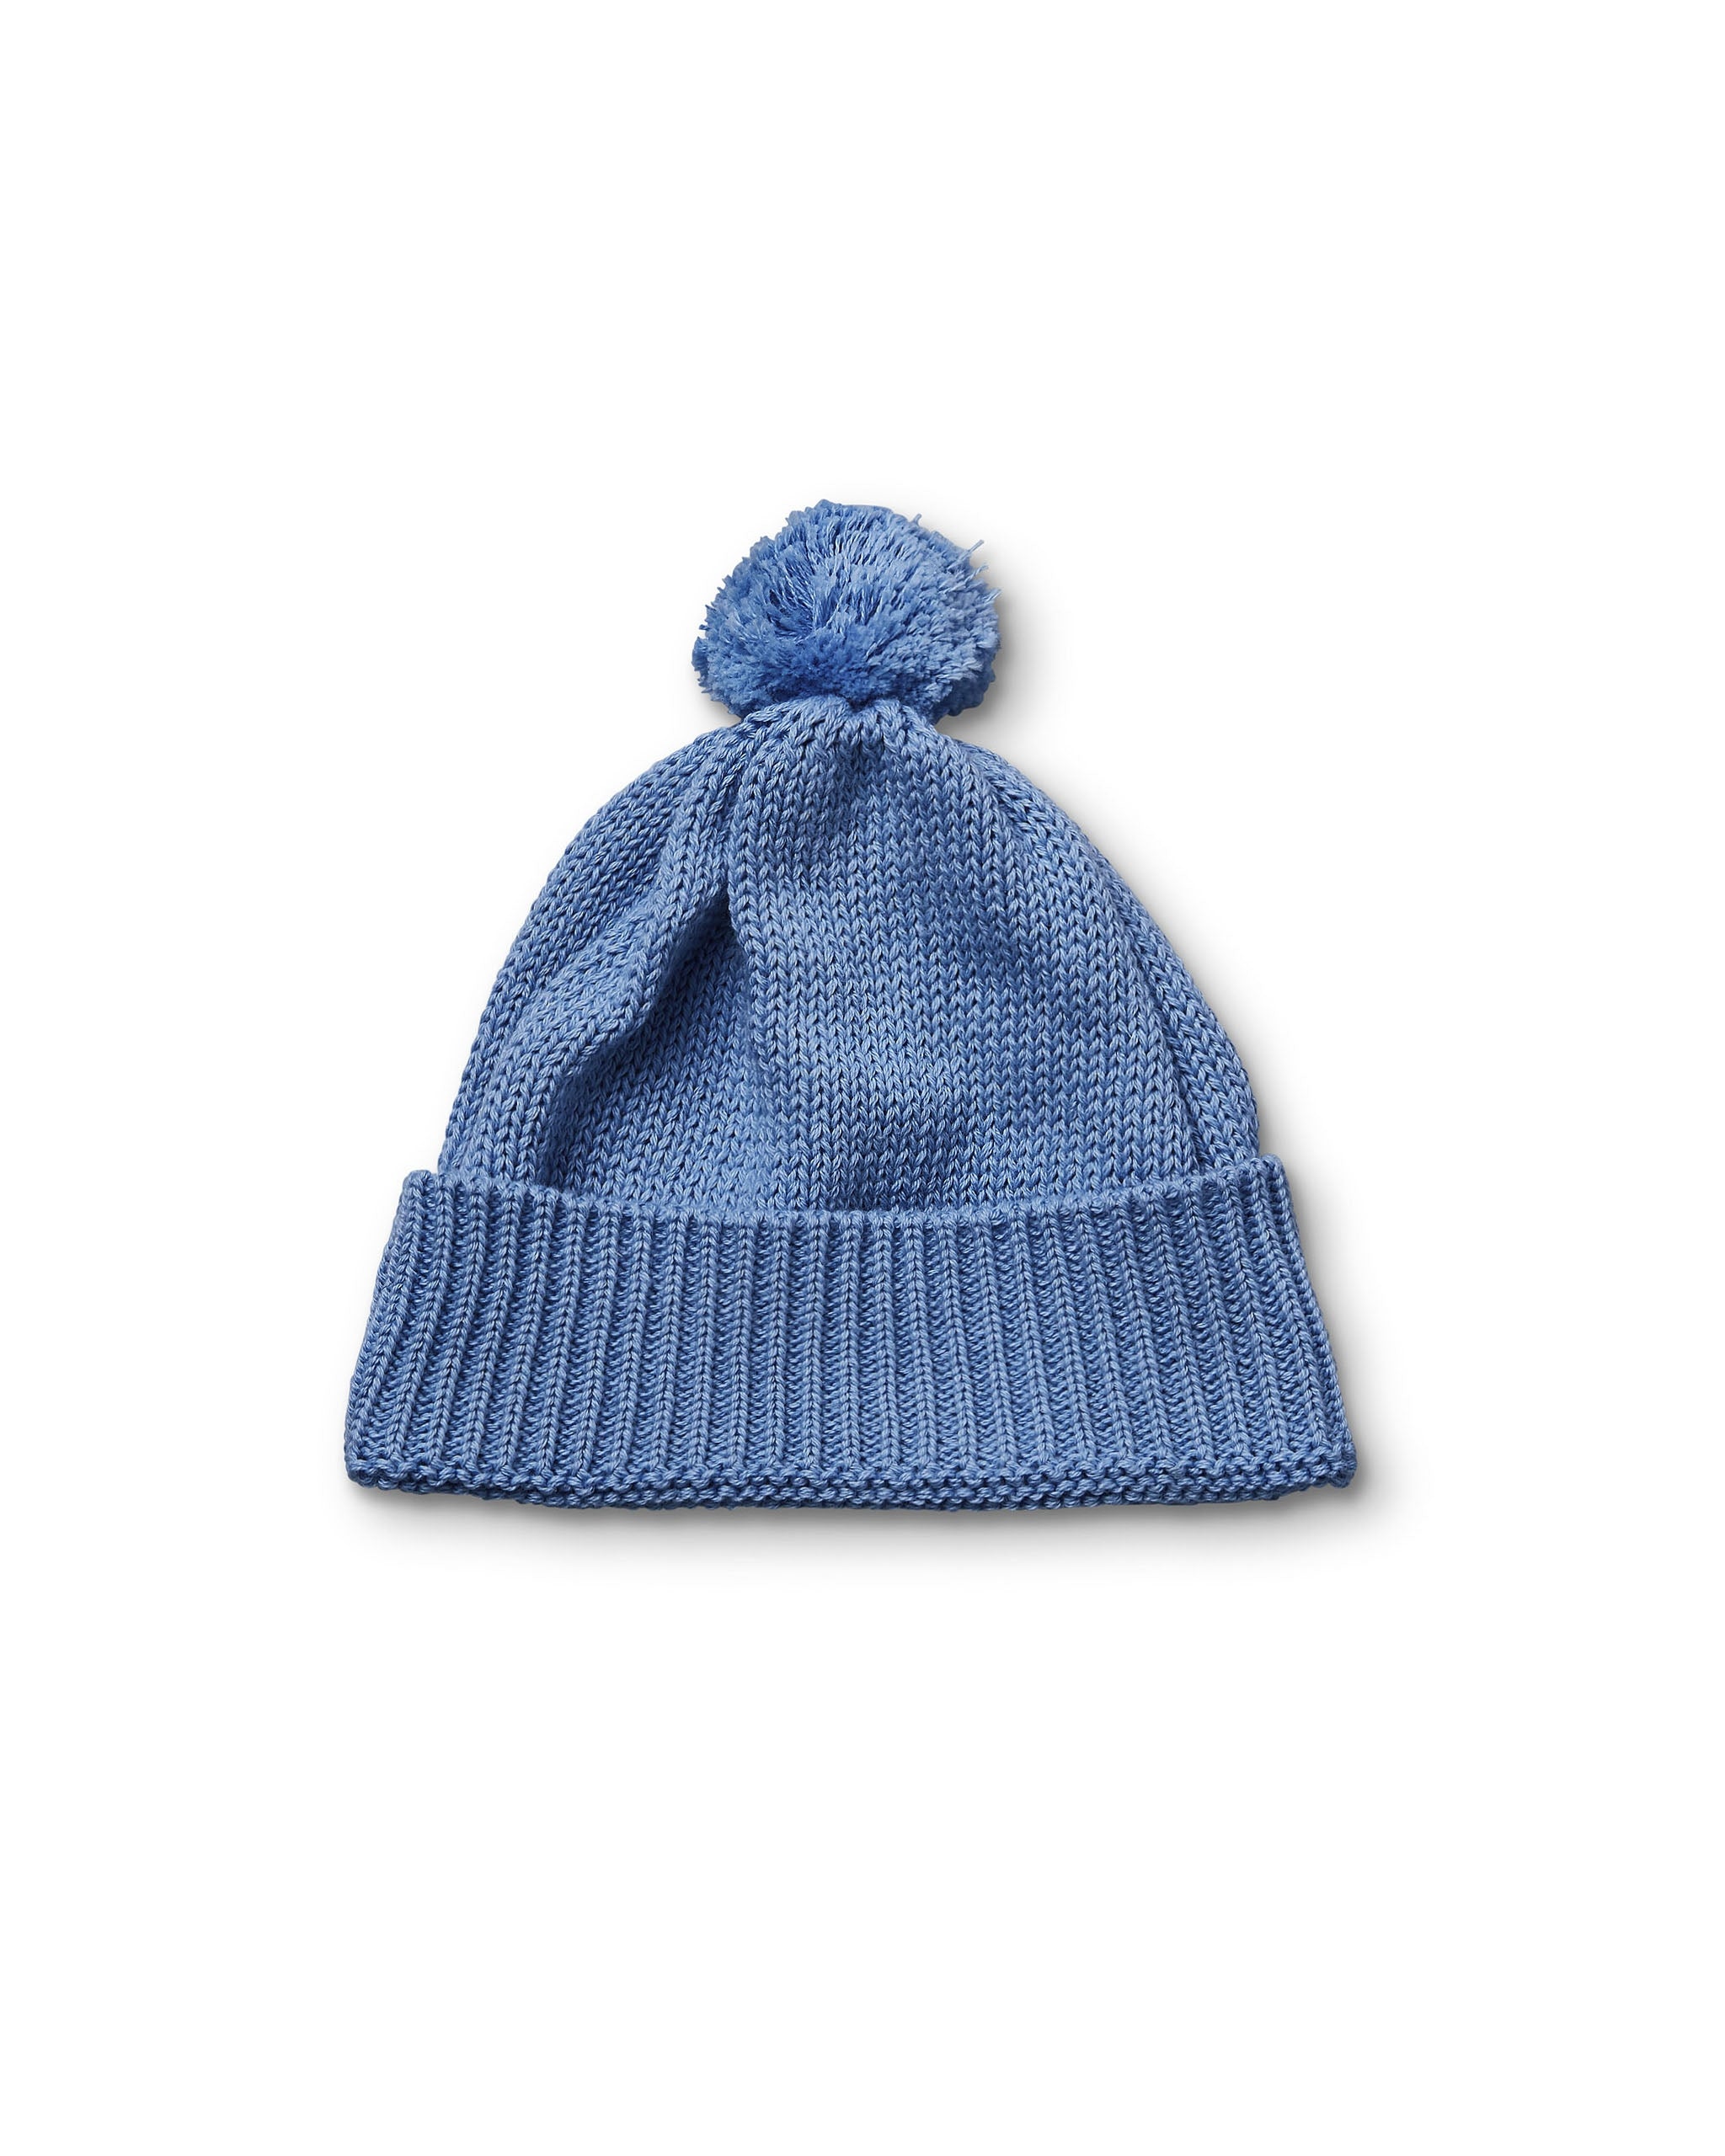 Bernie Blue Knitted Hat